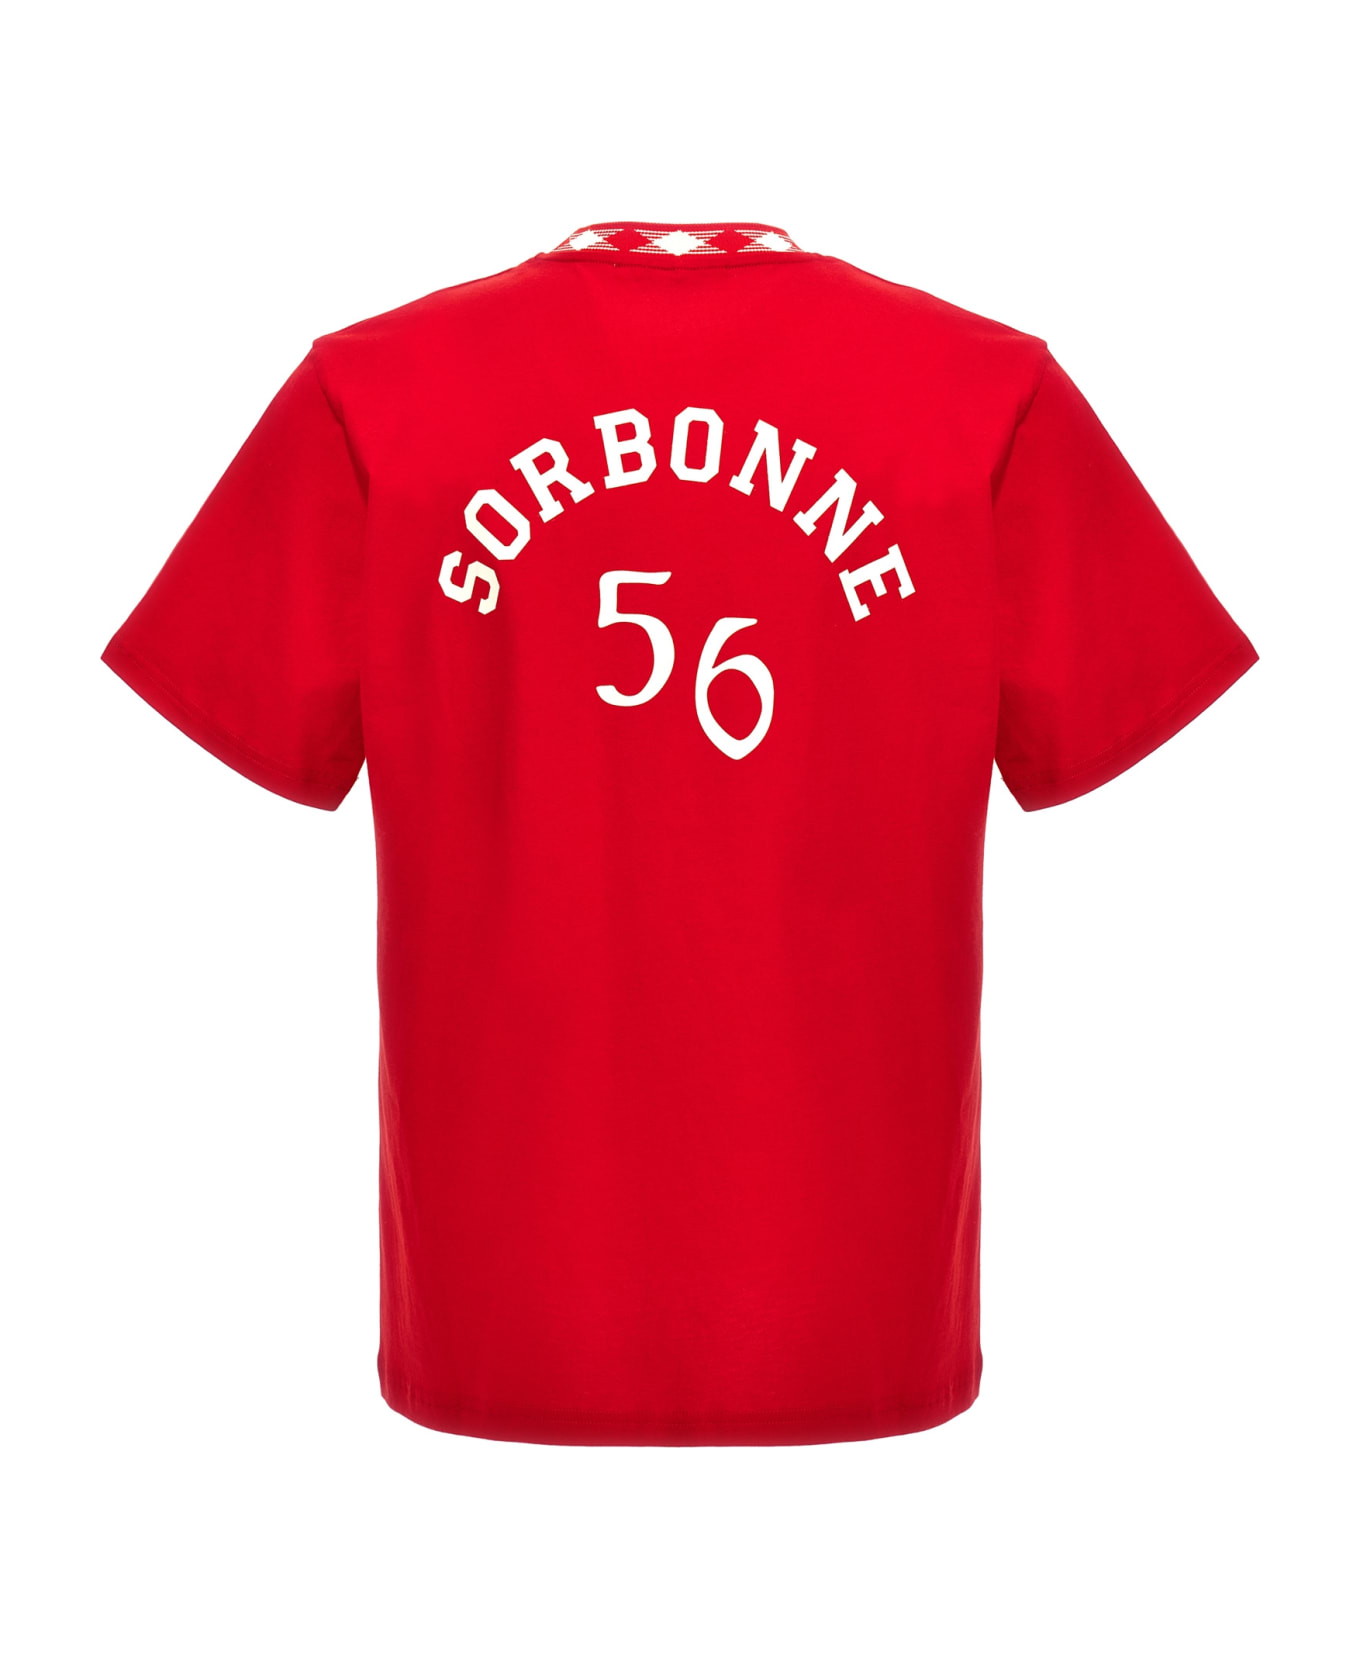 Wales Bonner 'original' T-shirt - Red シャツ